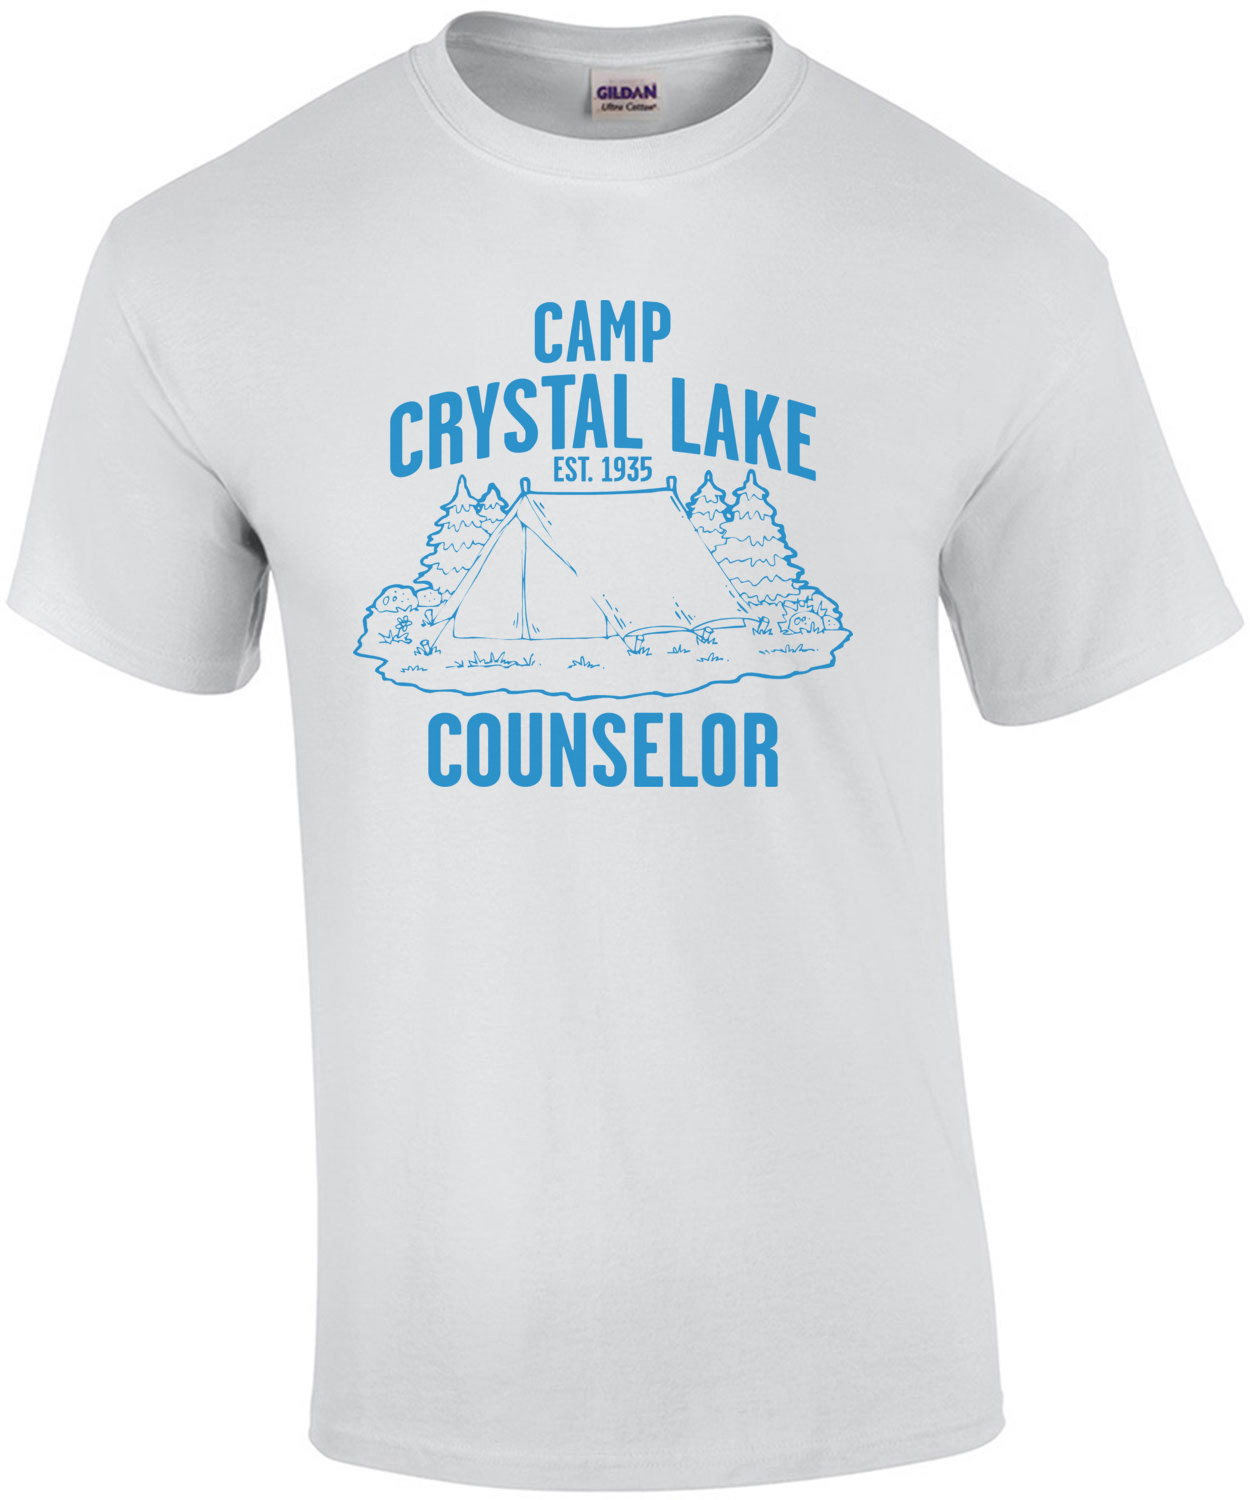 Camp Crystal Lake Counselor T-shirt